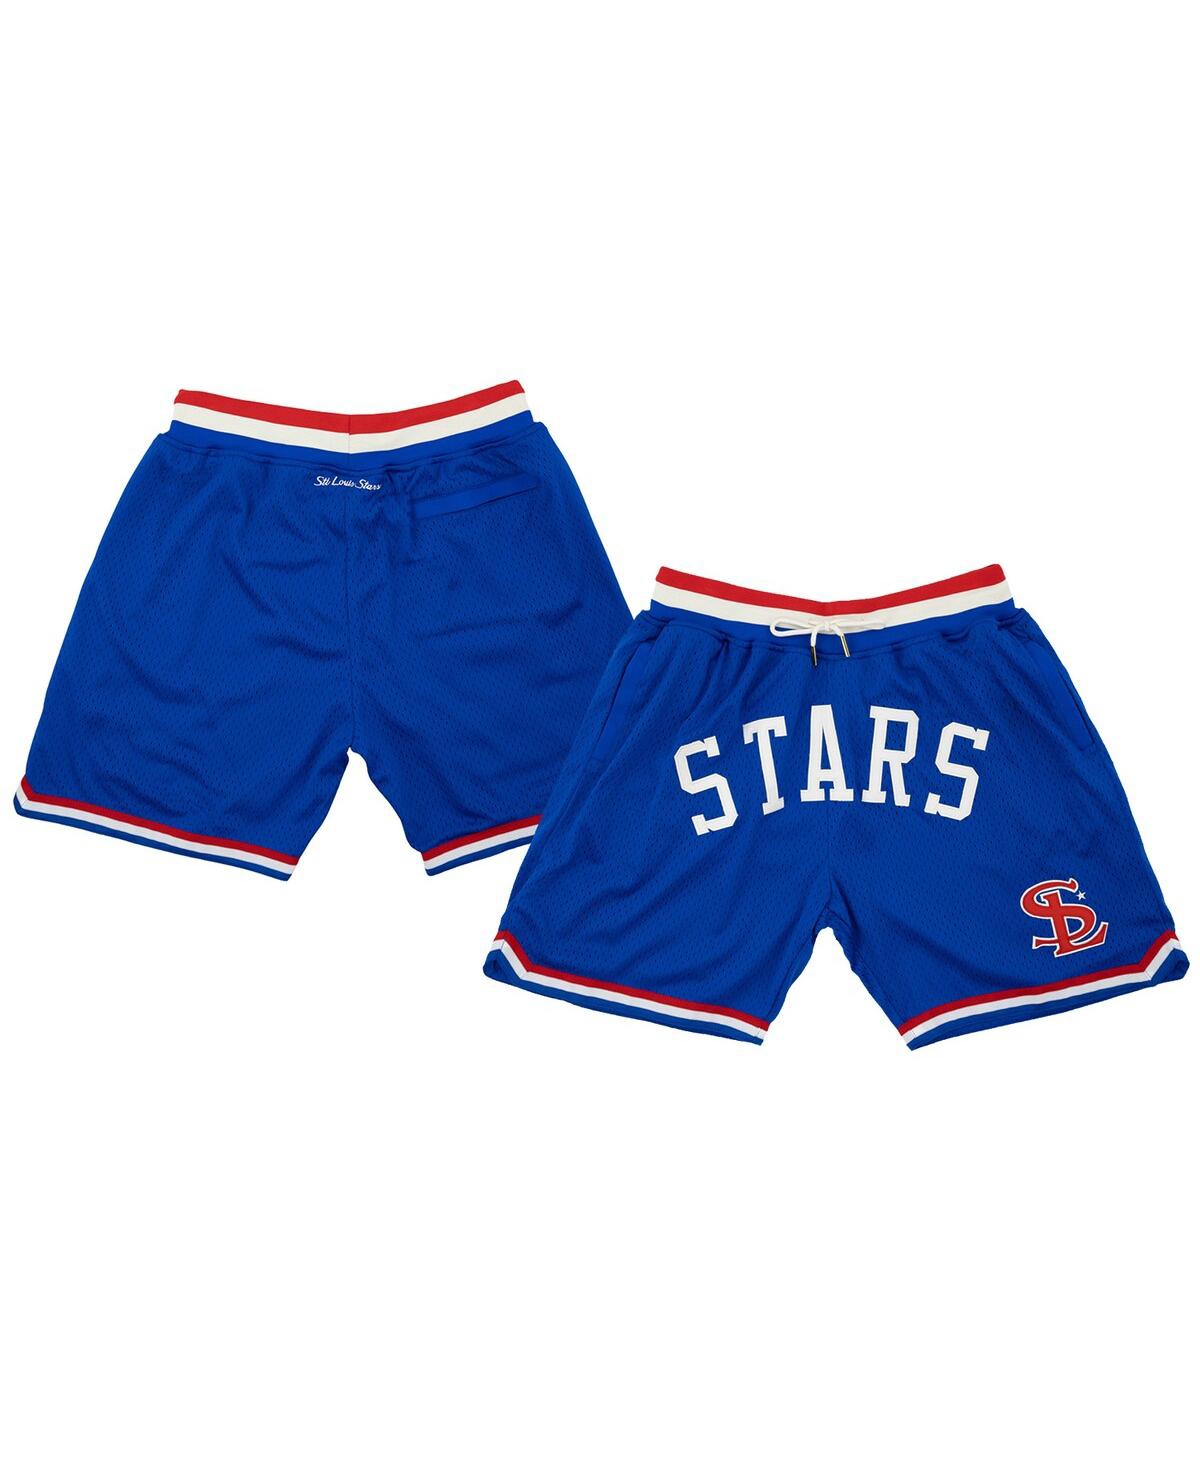 Shop Rings & Crwns Men's  Royal St. Louis Stars Replica Mesh Shorts